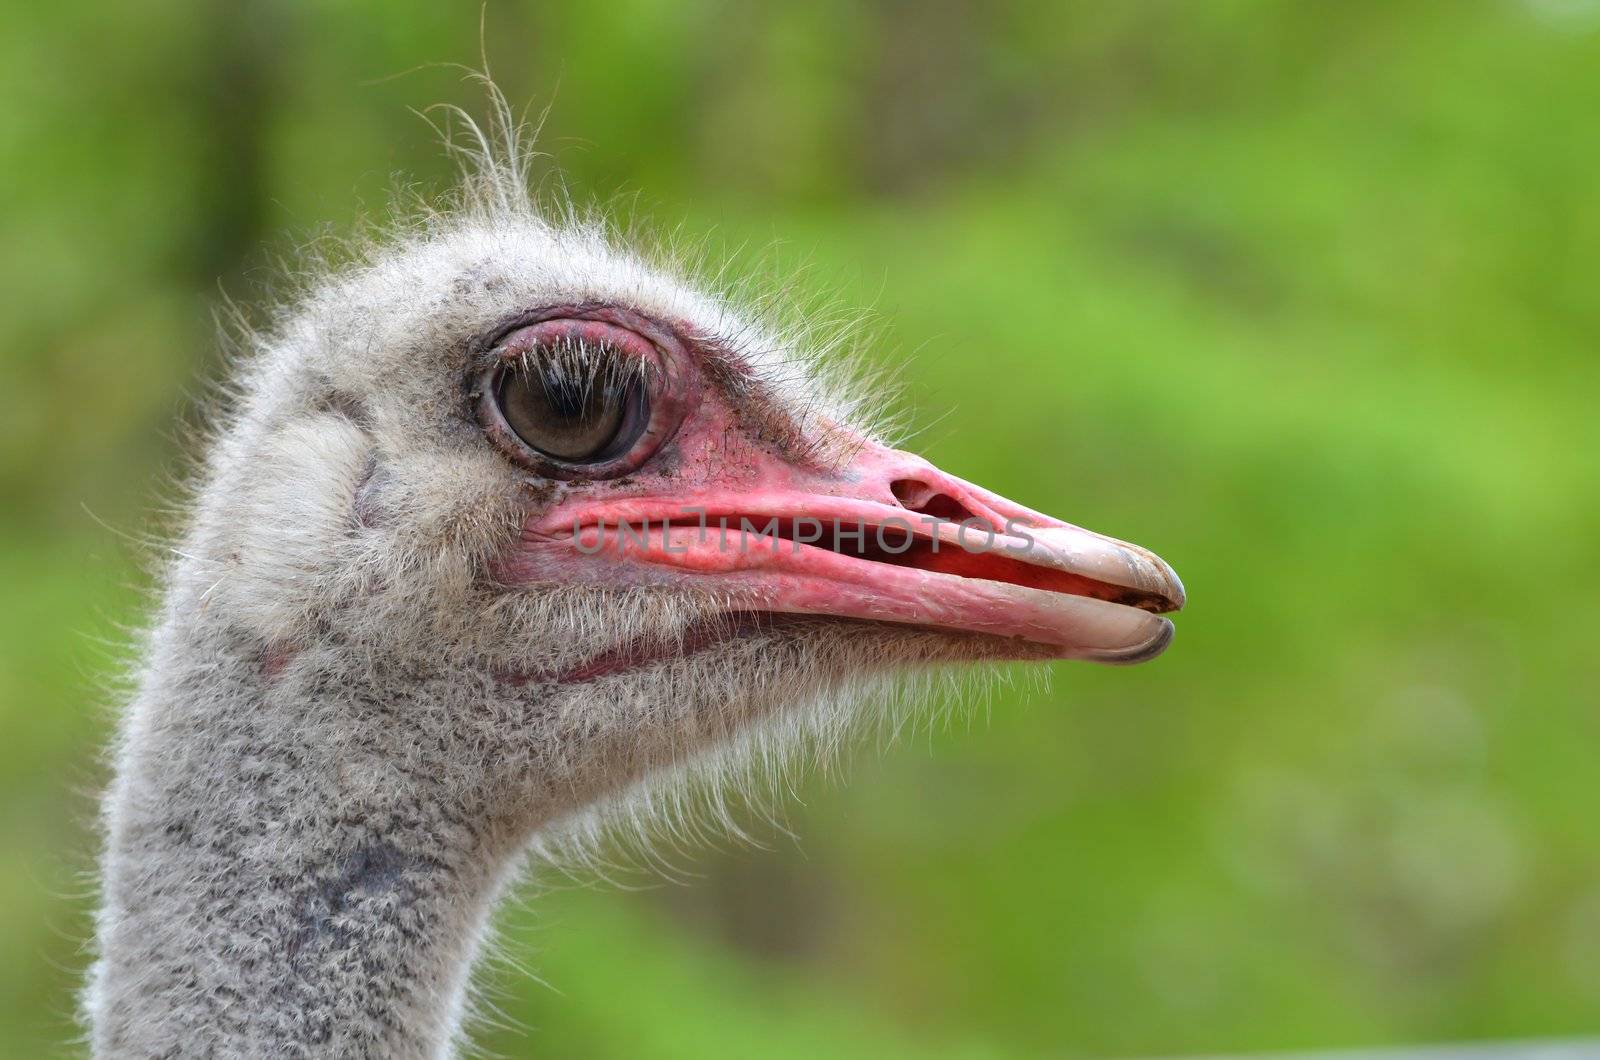 The head of an ostrich 